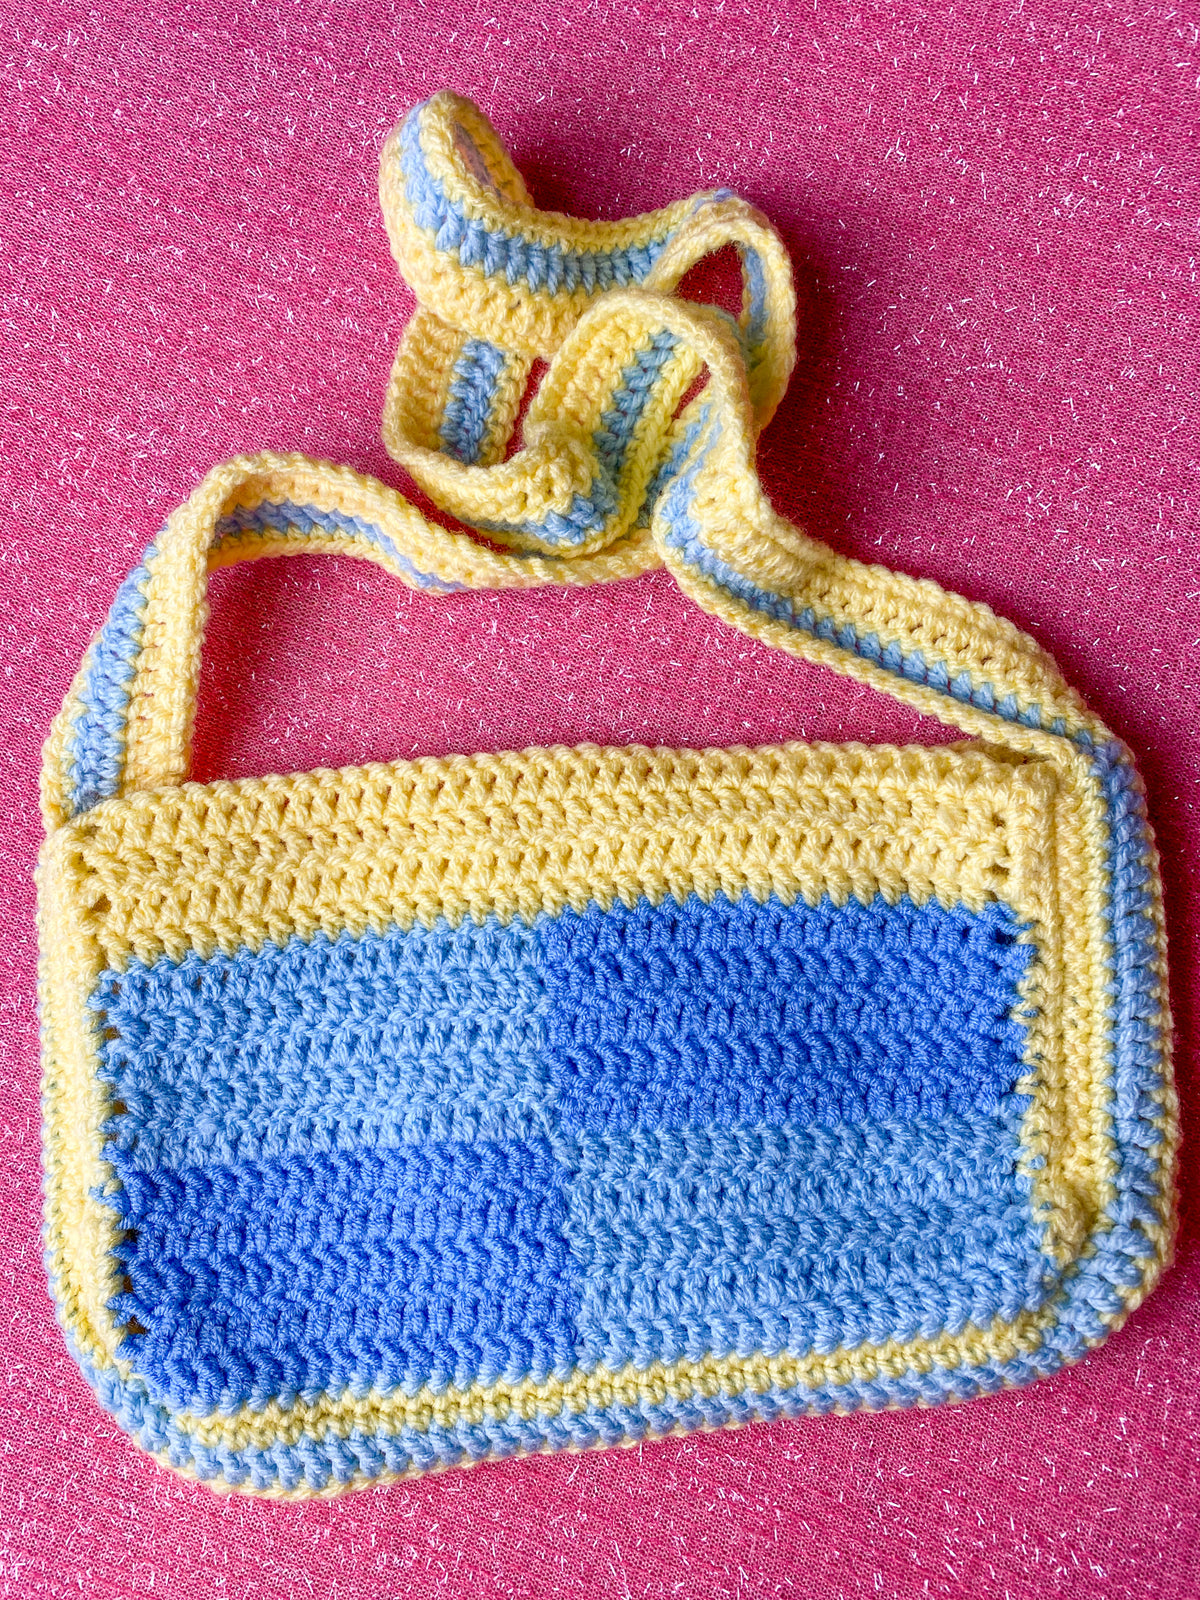 blue and yellow crochet bag